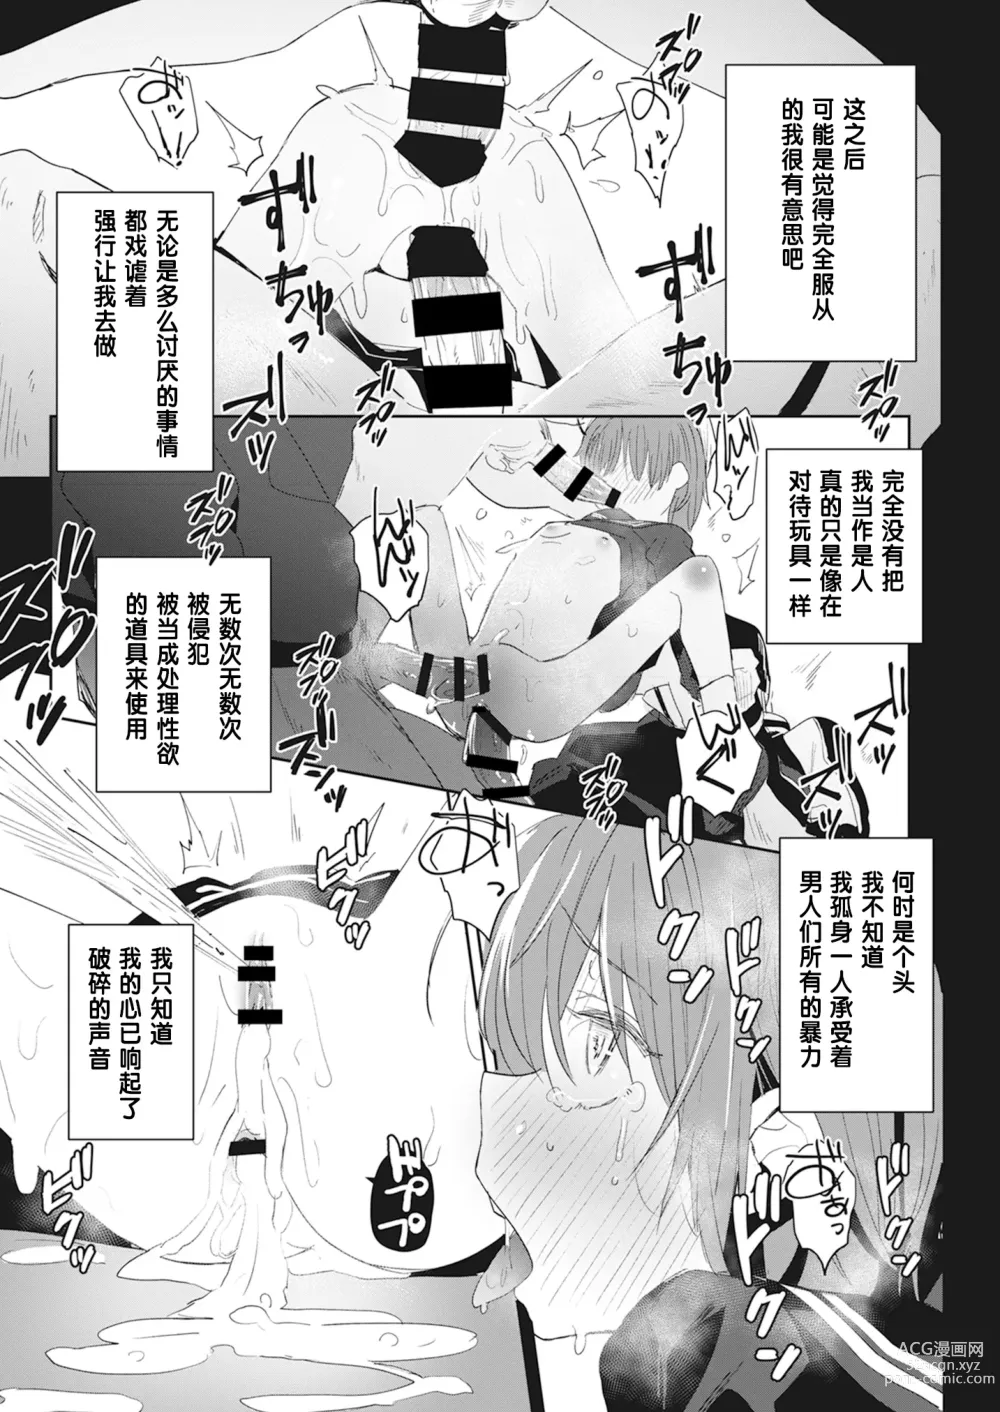 Page 83 of doujinshi 我们的CQC ~ 小小子宫梦想满溢